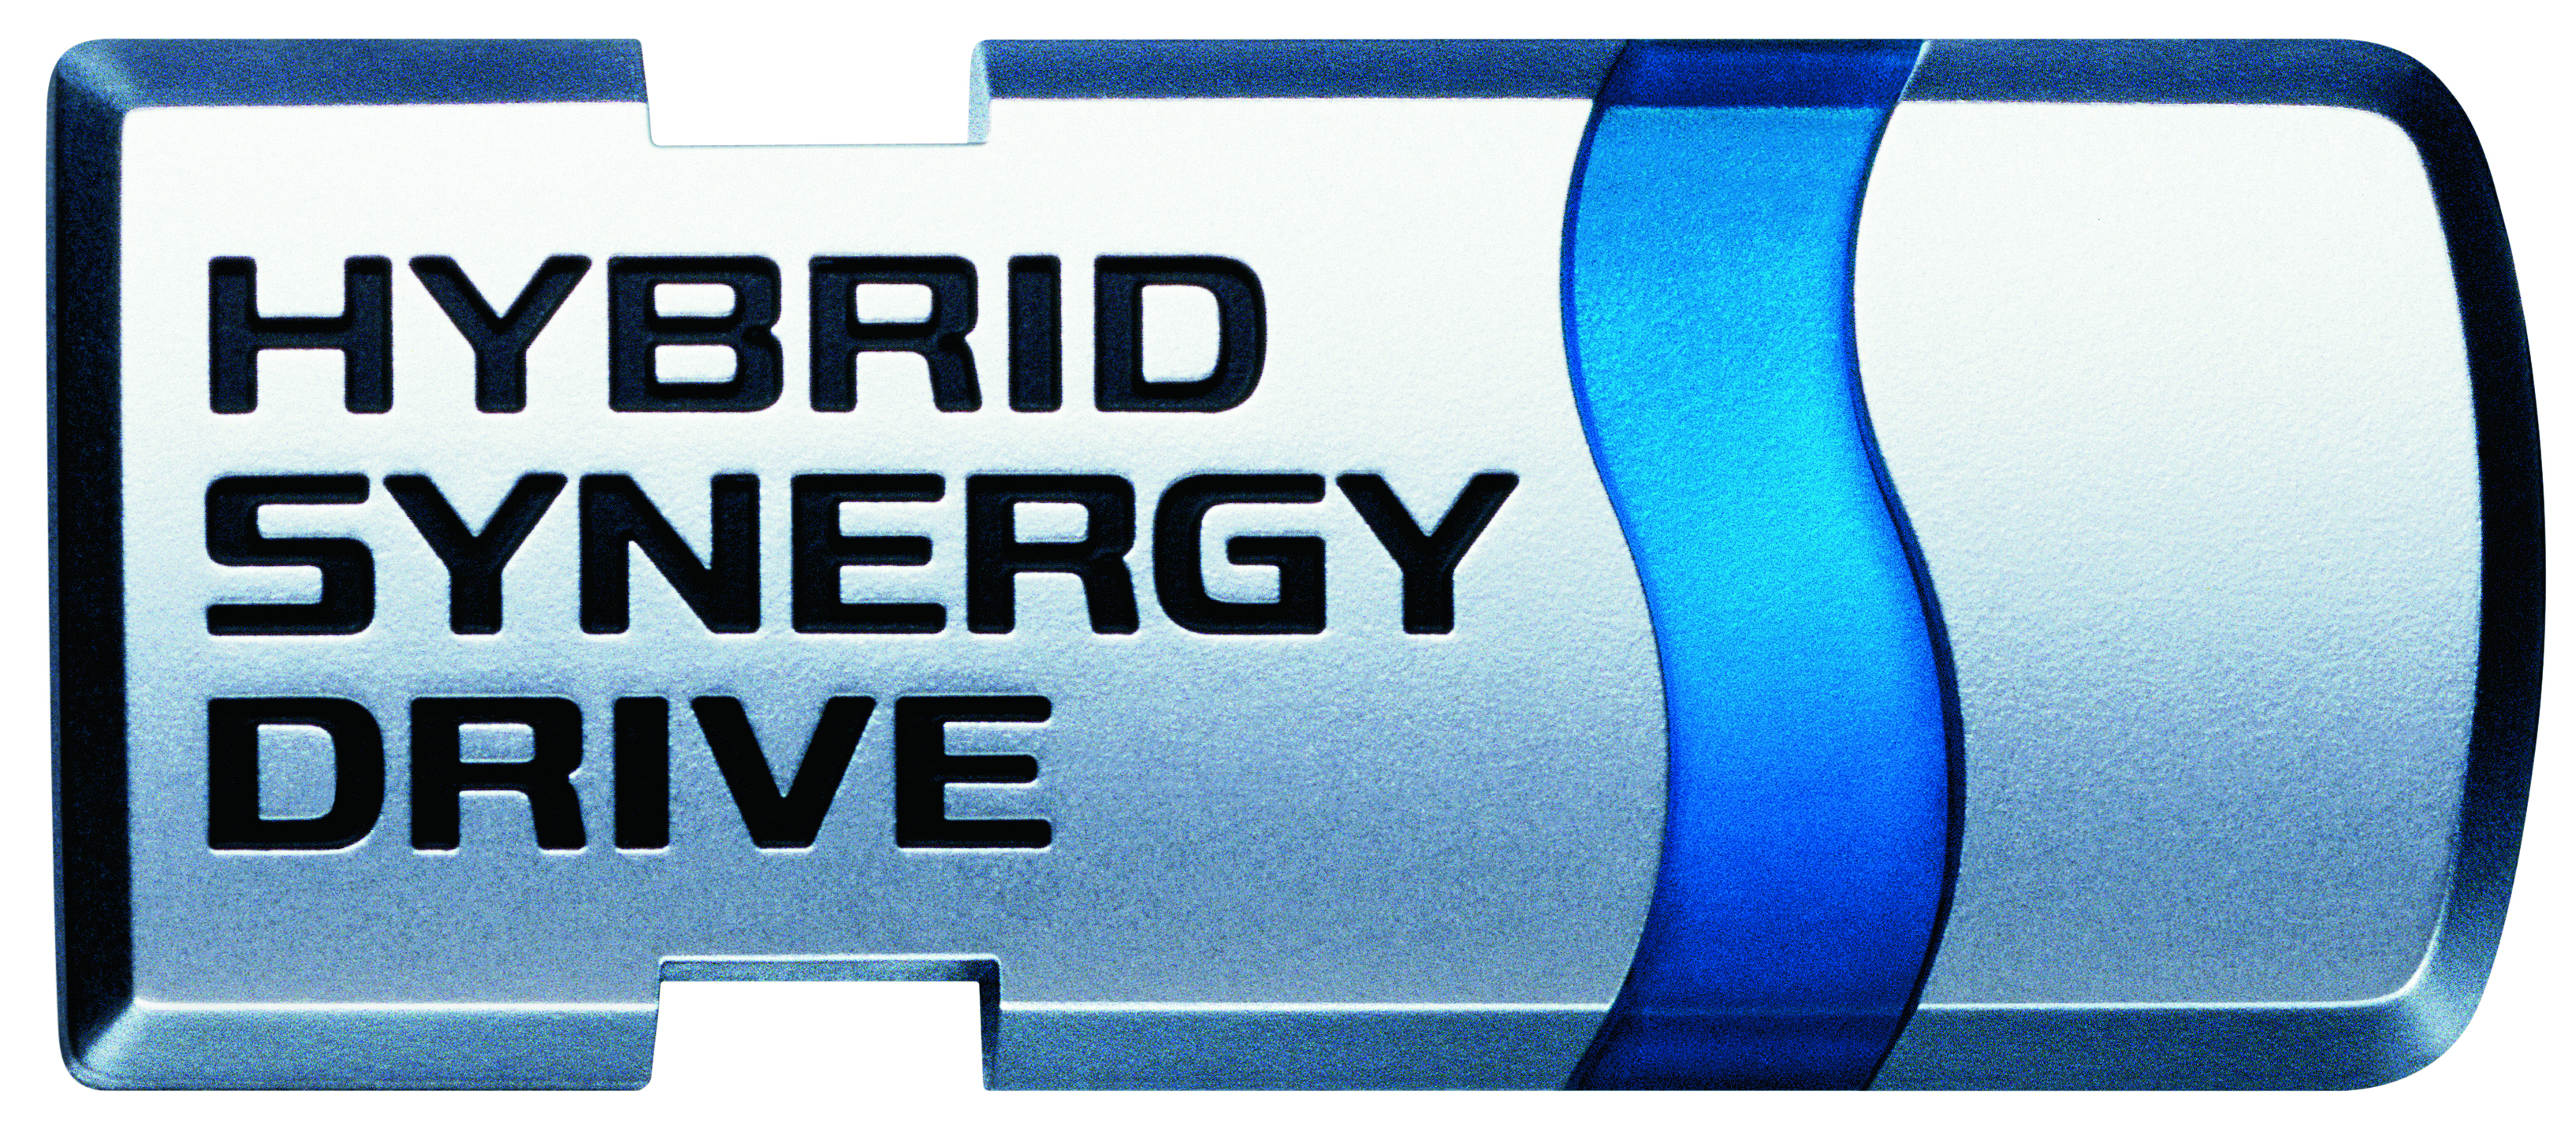 hybrid synergy drive